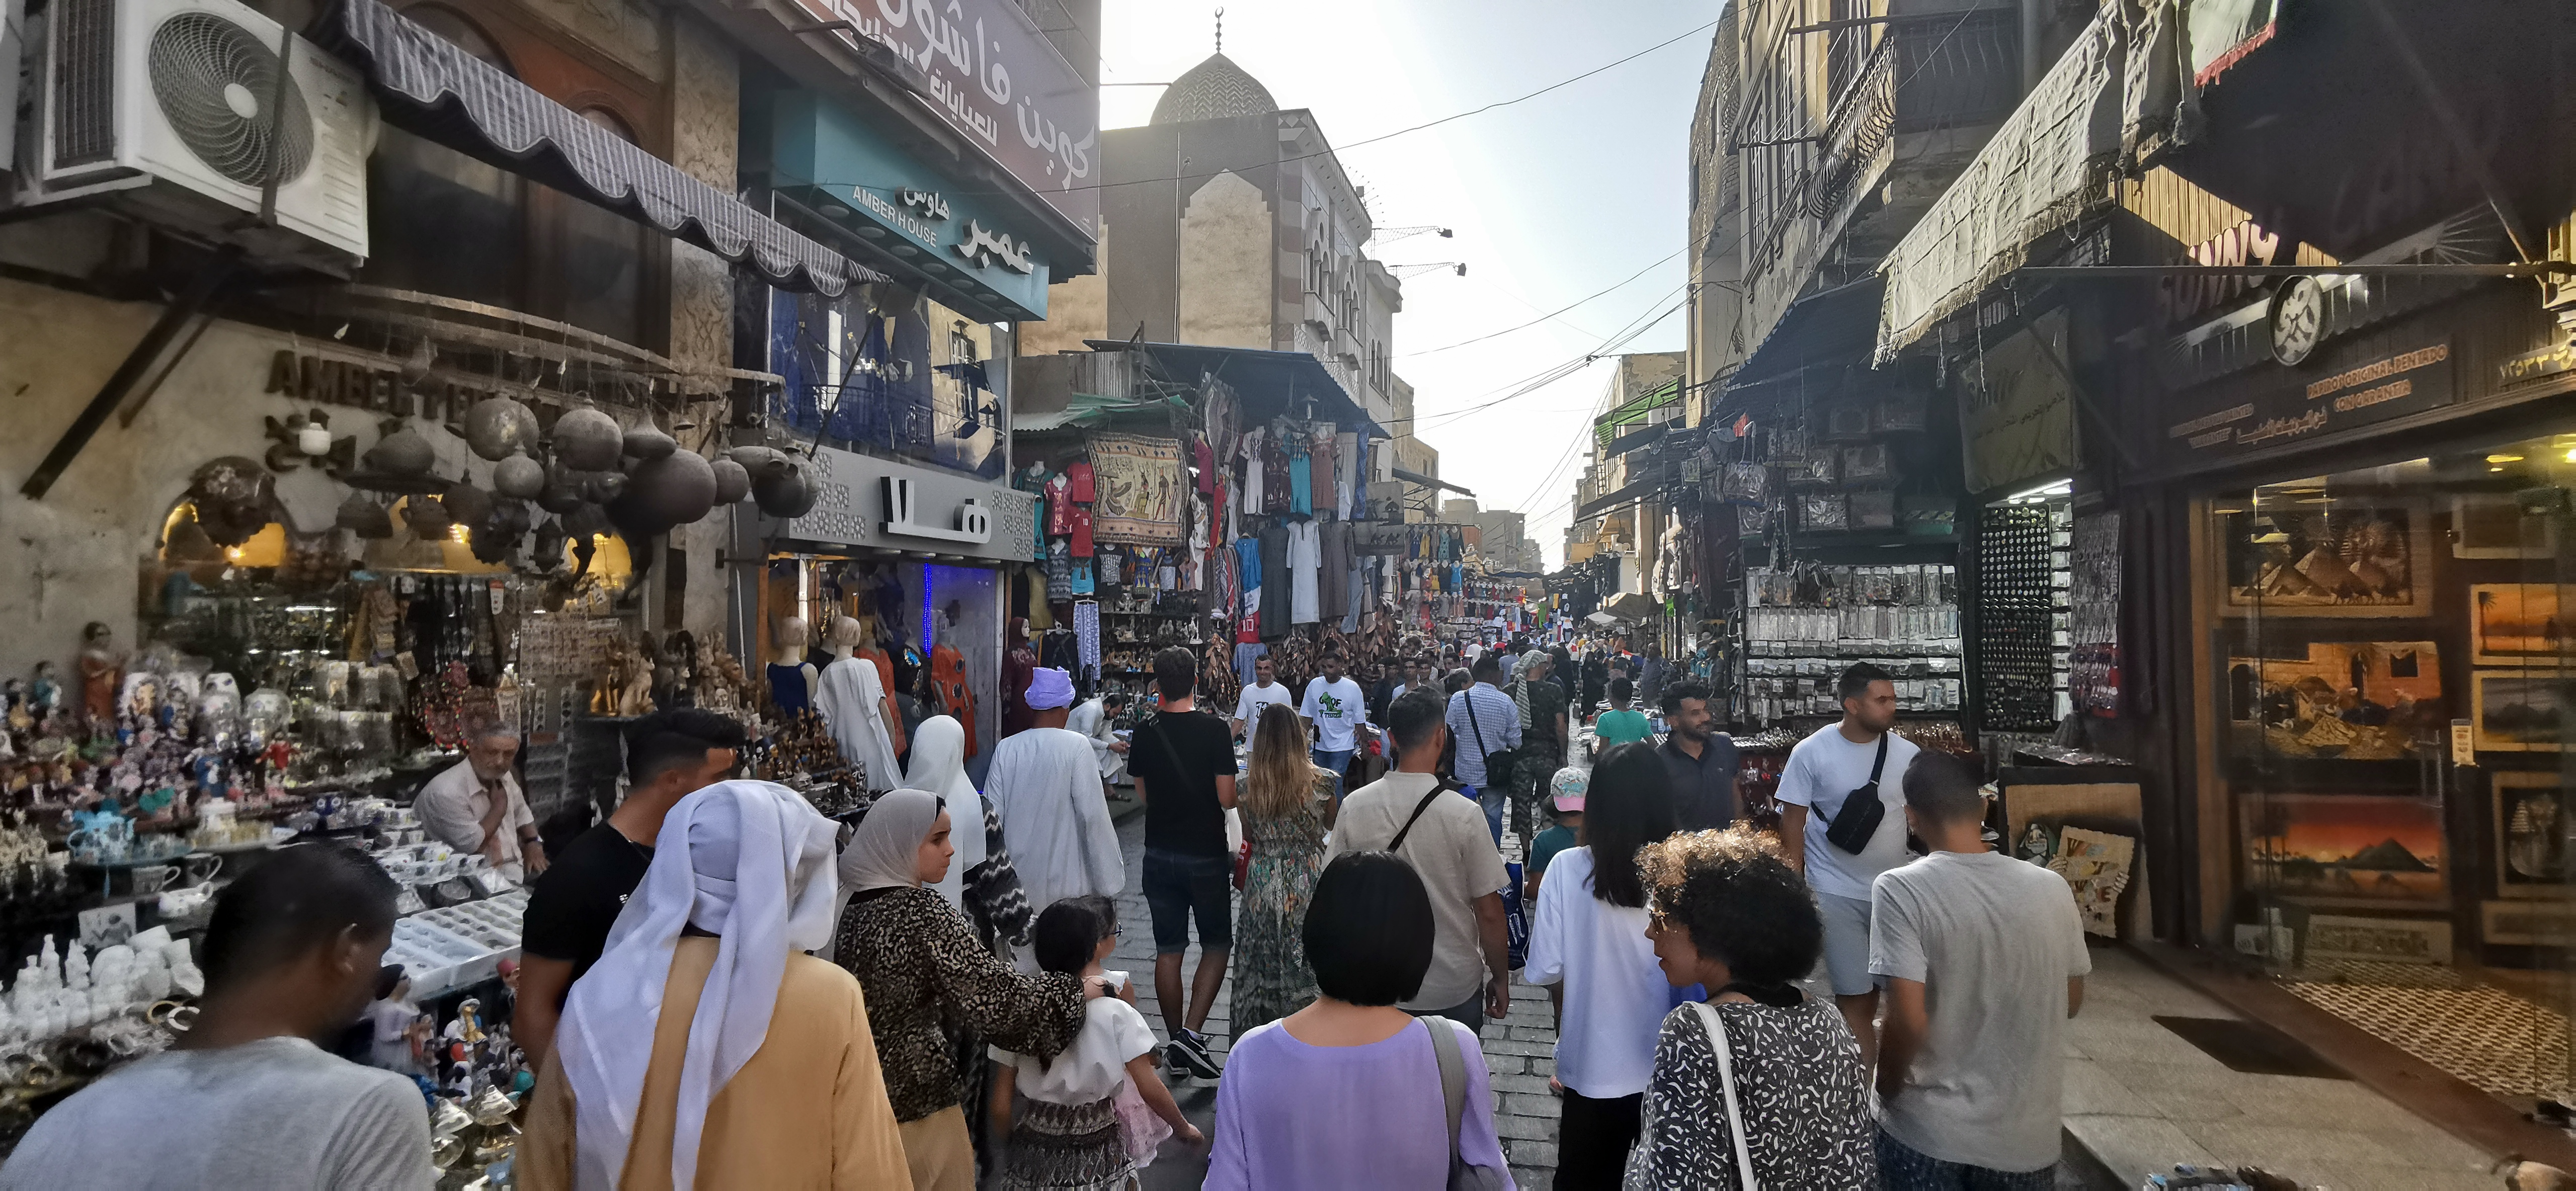 People visit the Khan El-Khalili market in Cairo. /CGTN